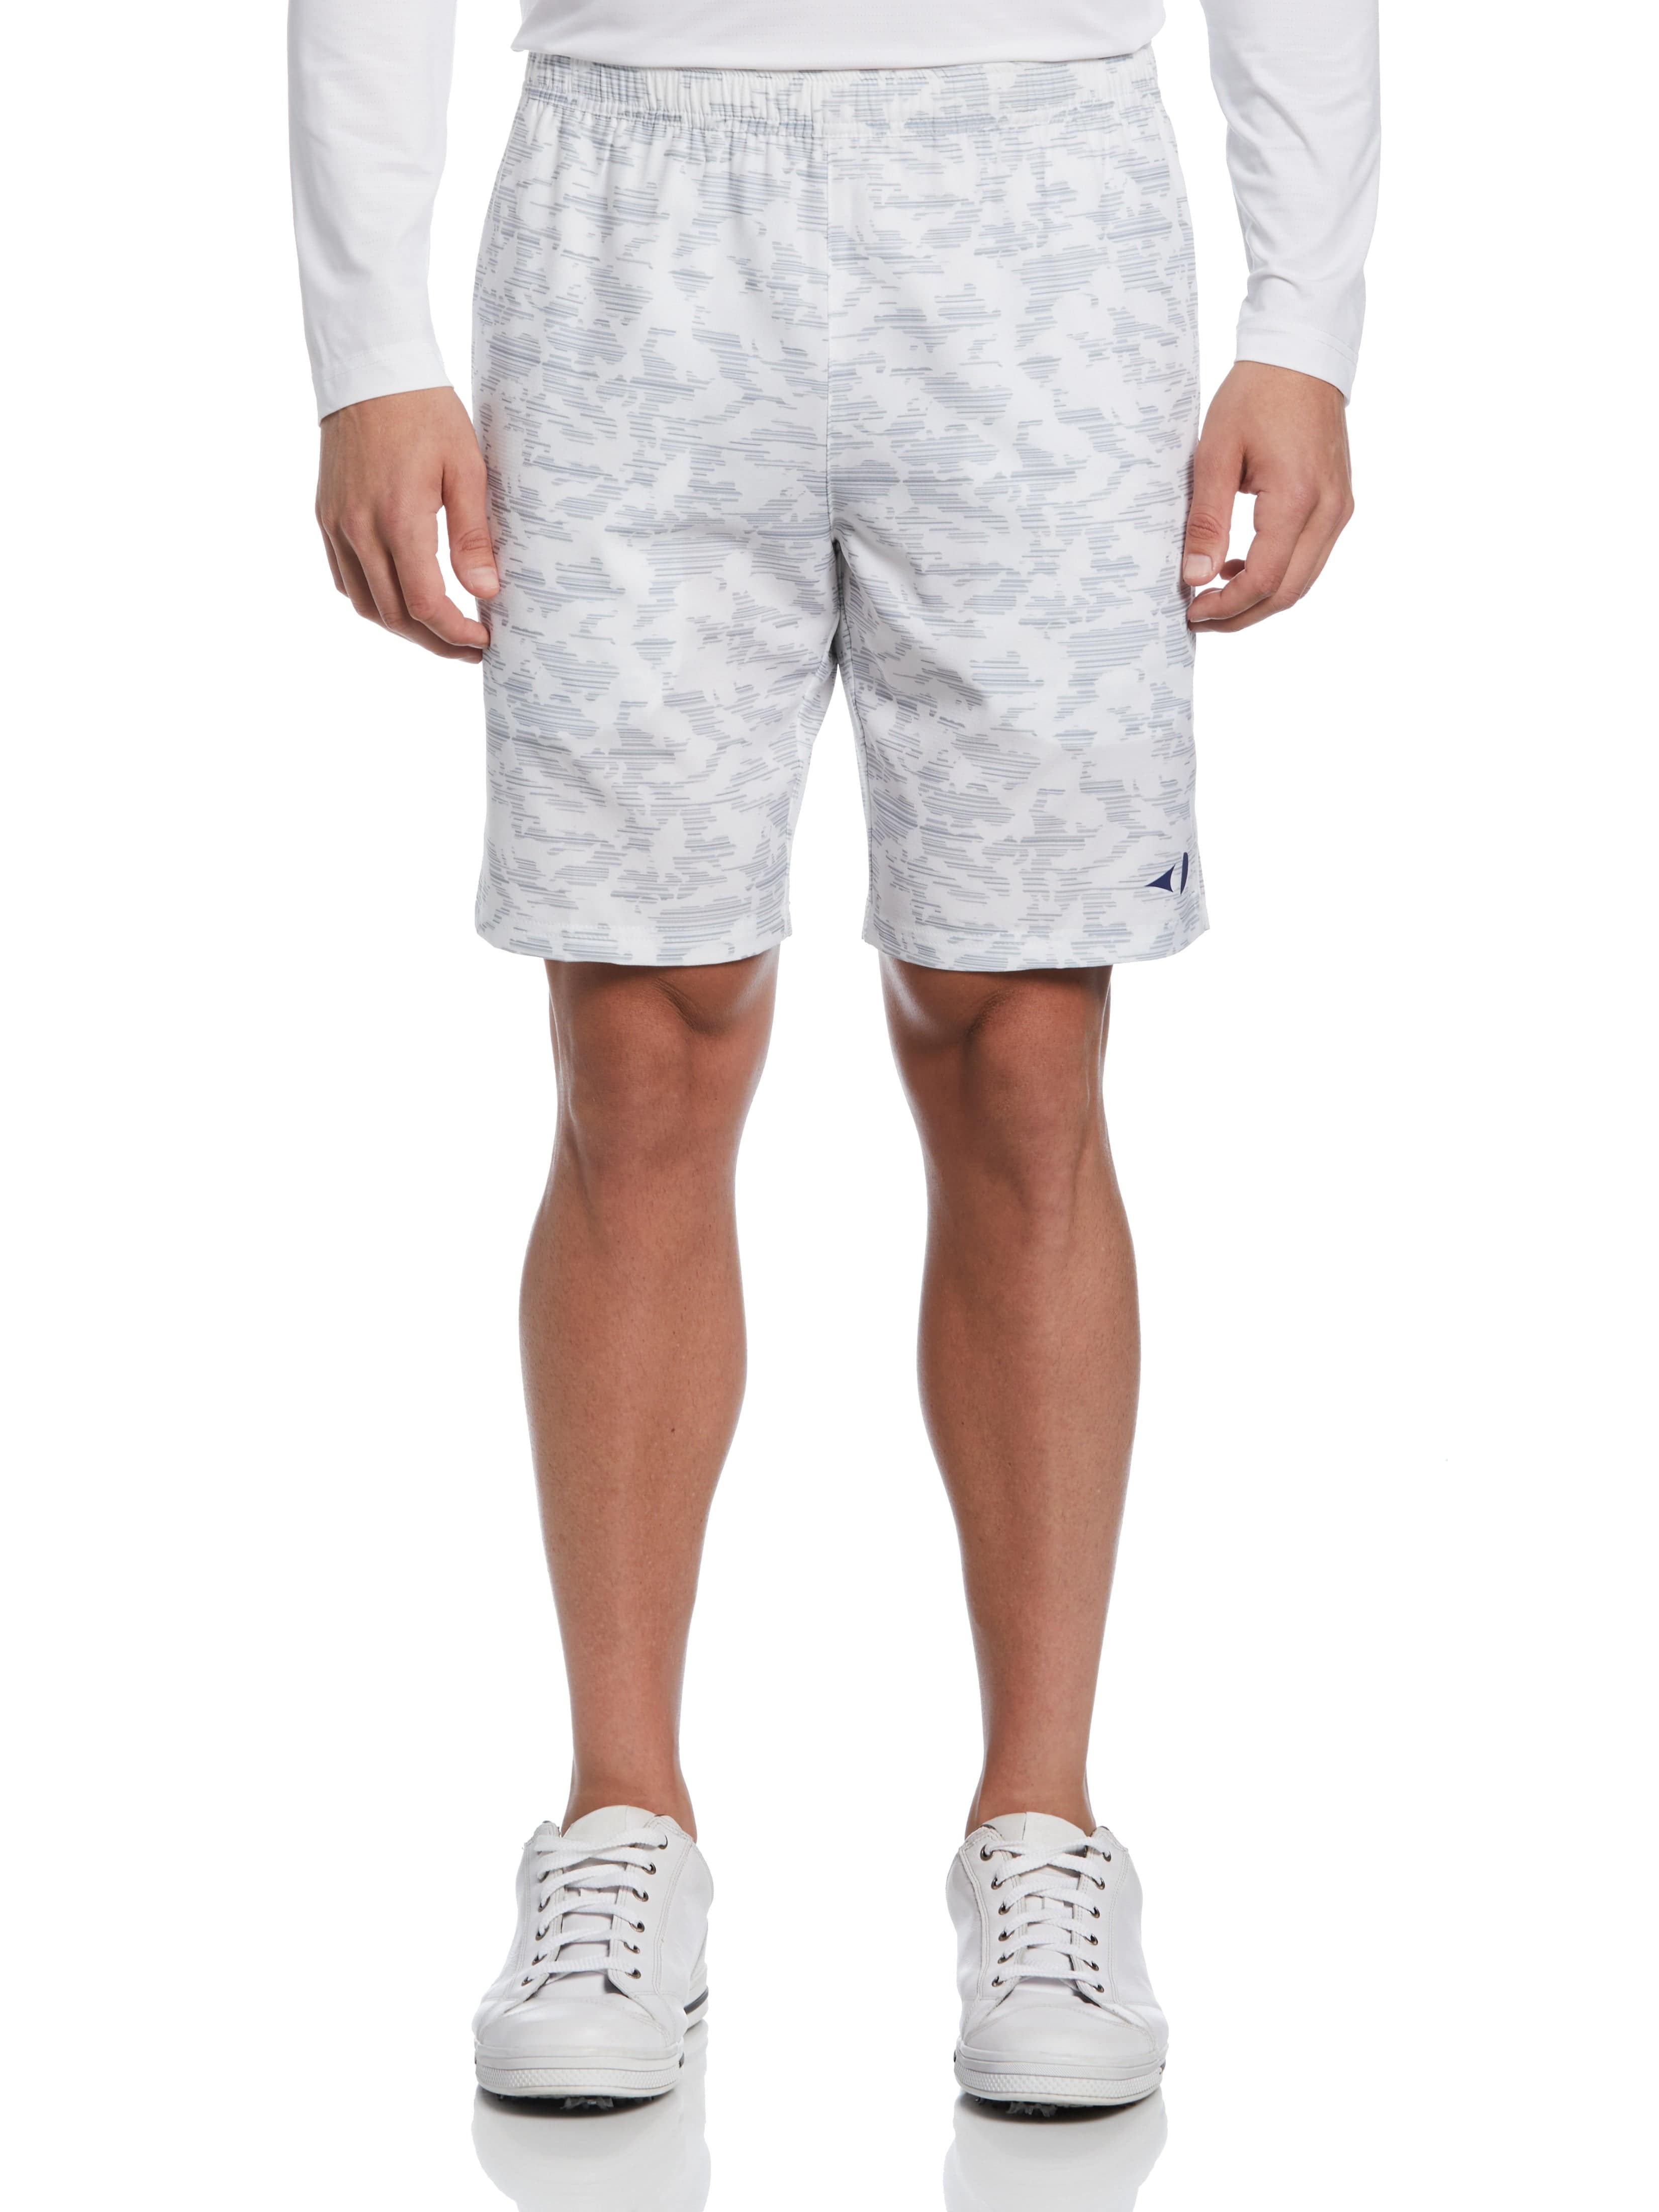 Grand Slam Mens Camo Printed Tennis Short, Size 2XL, White, Polyester/Elastane | Golf Apparel Shop